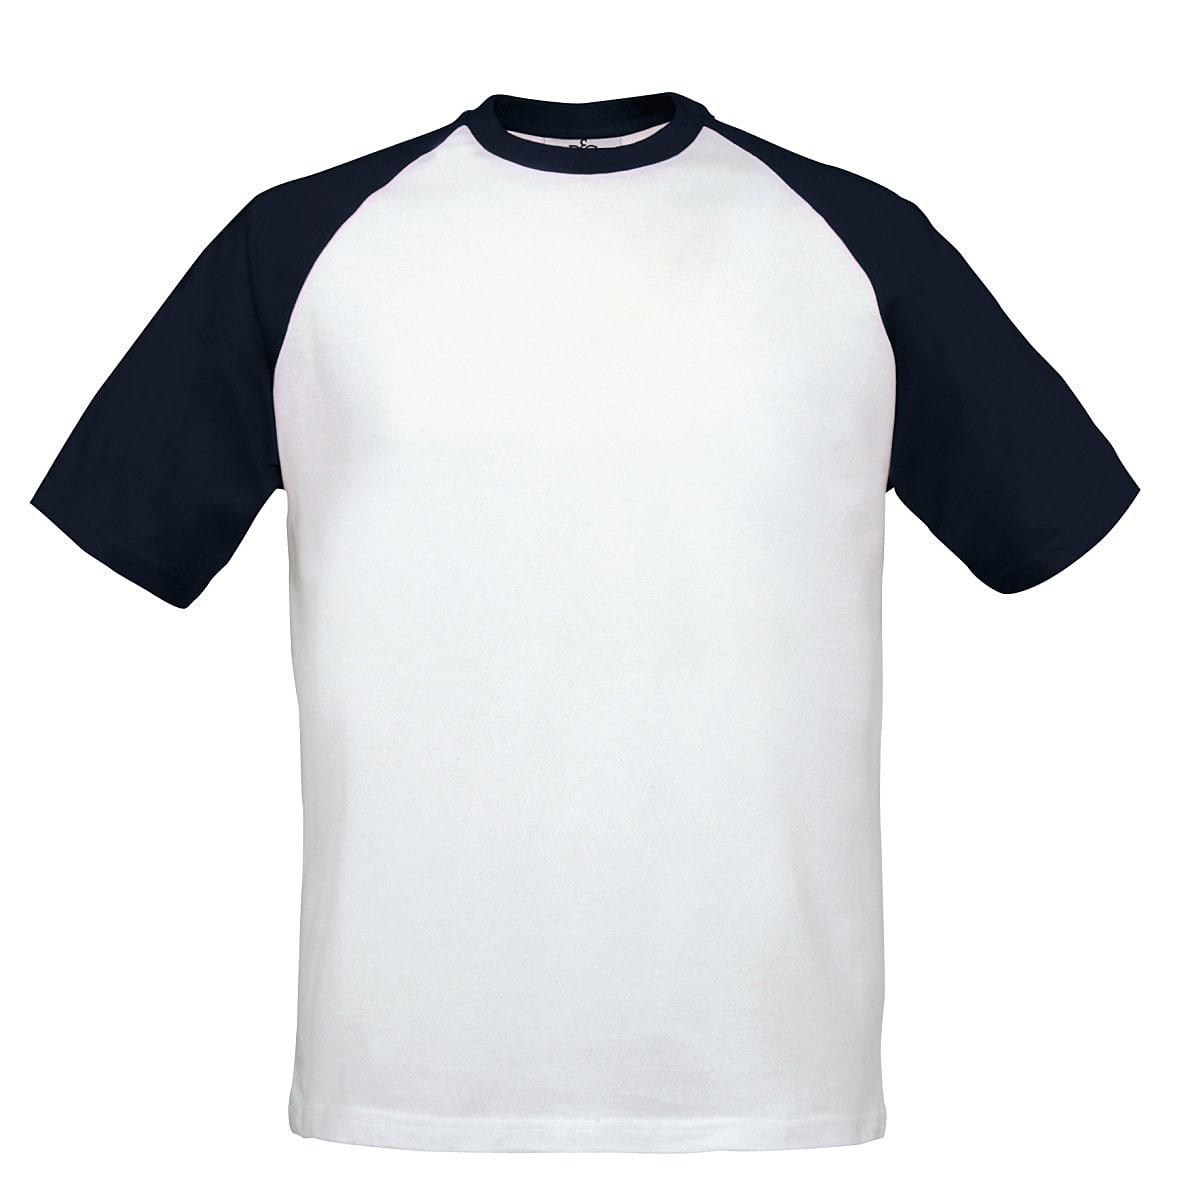 B&C Mens Short-Sleeve Baseball T-Shirt in White / Navy (Product Code: TU020)